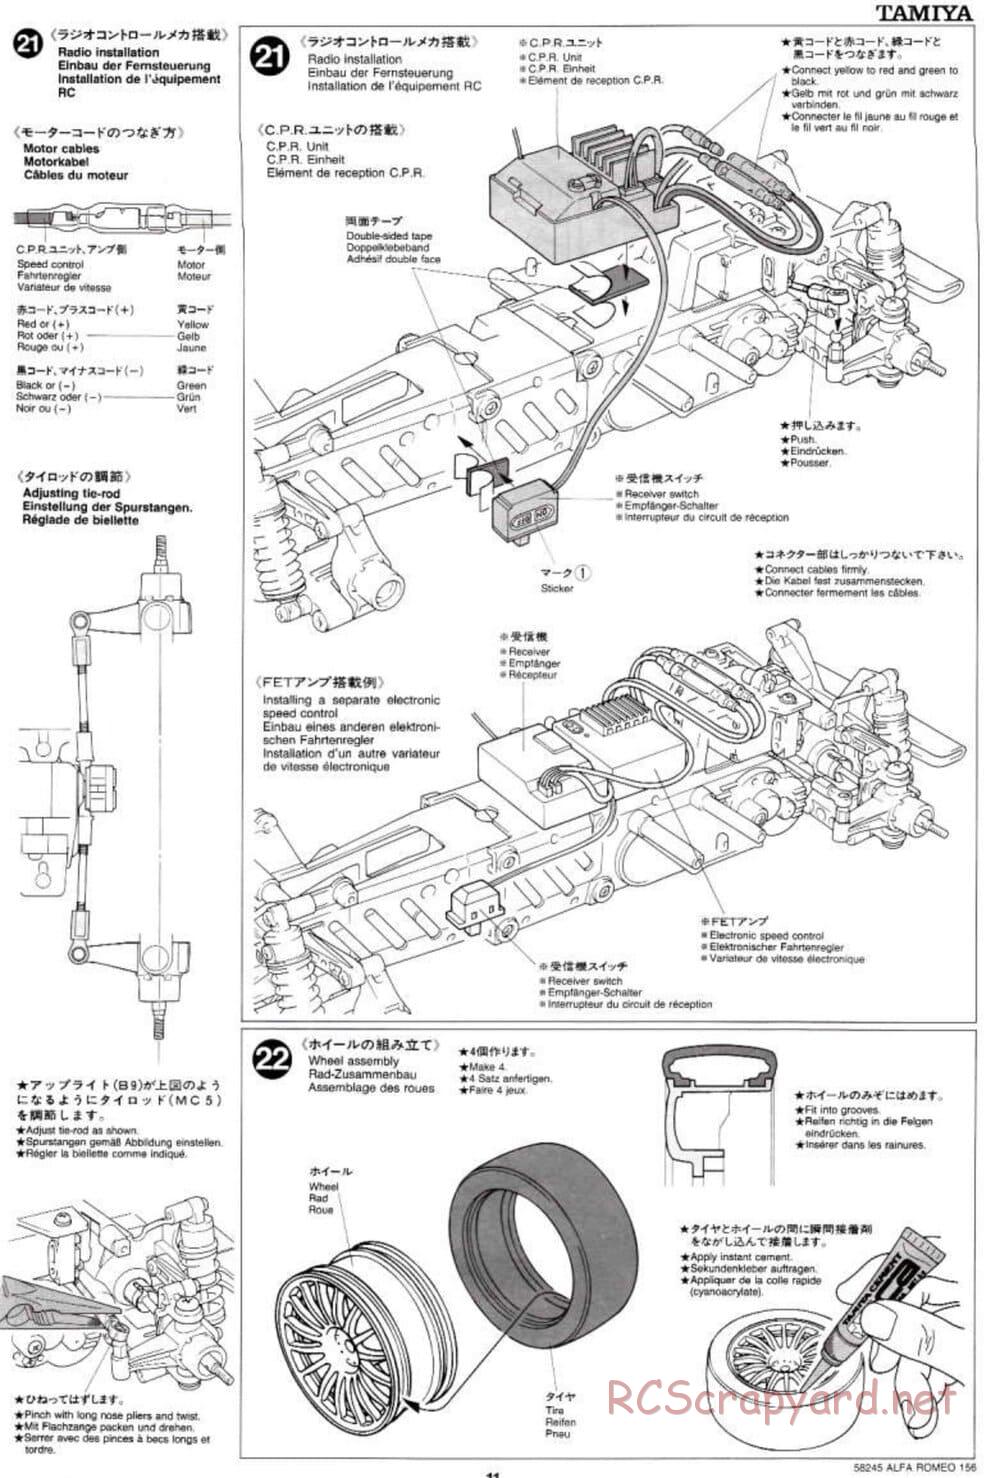 Tamiya - Alfa Romeo 156 Racing - FF-02 Chassis - Manual - Page 11